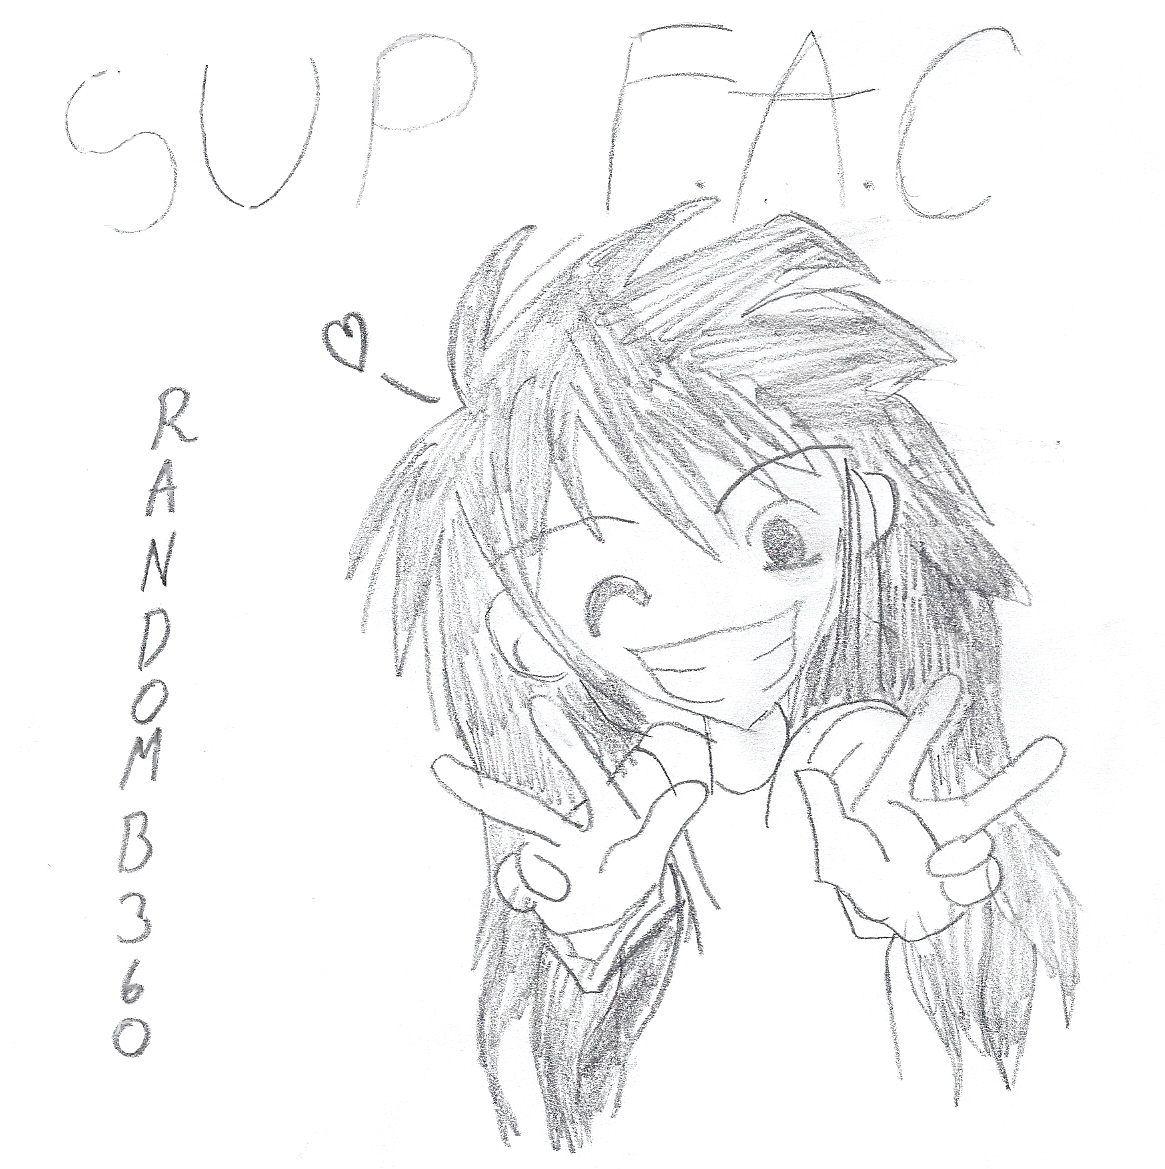 Sup F.A.C by RandomB360